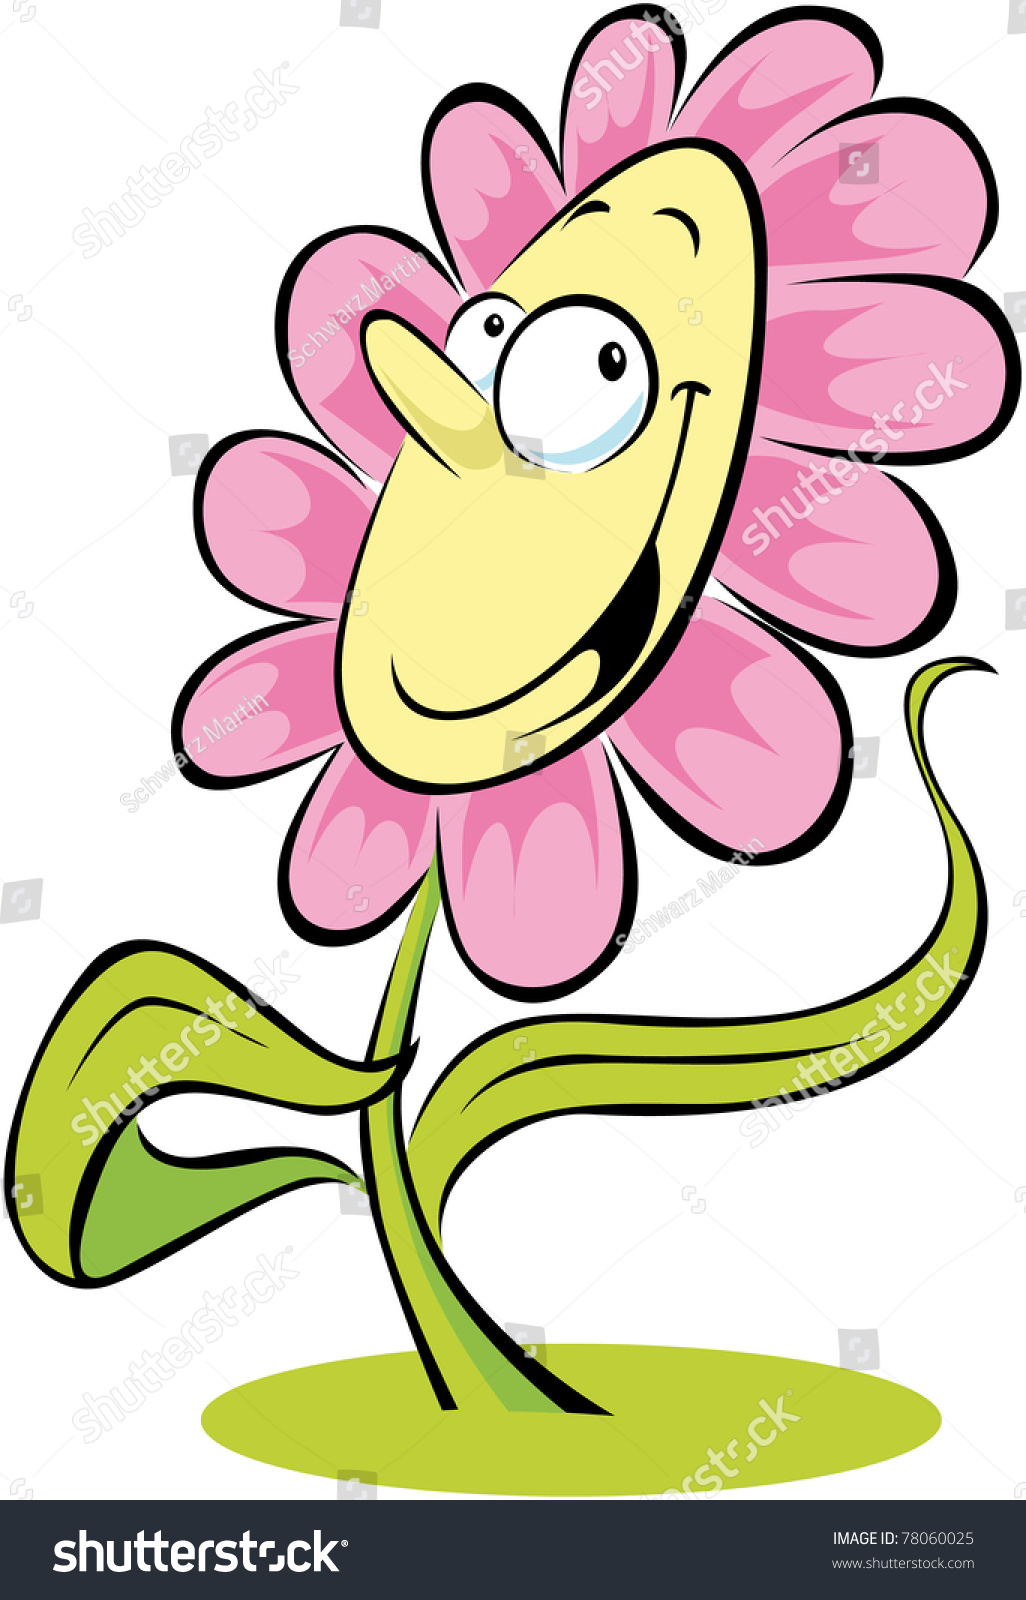 Edit Vectors Free Online - flower cartoon | Shutterstock Editor